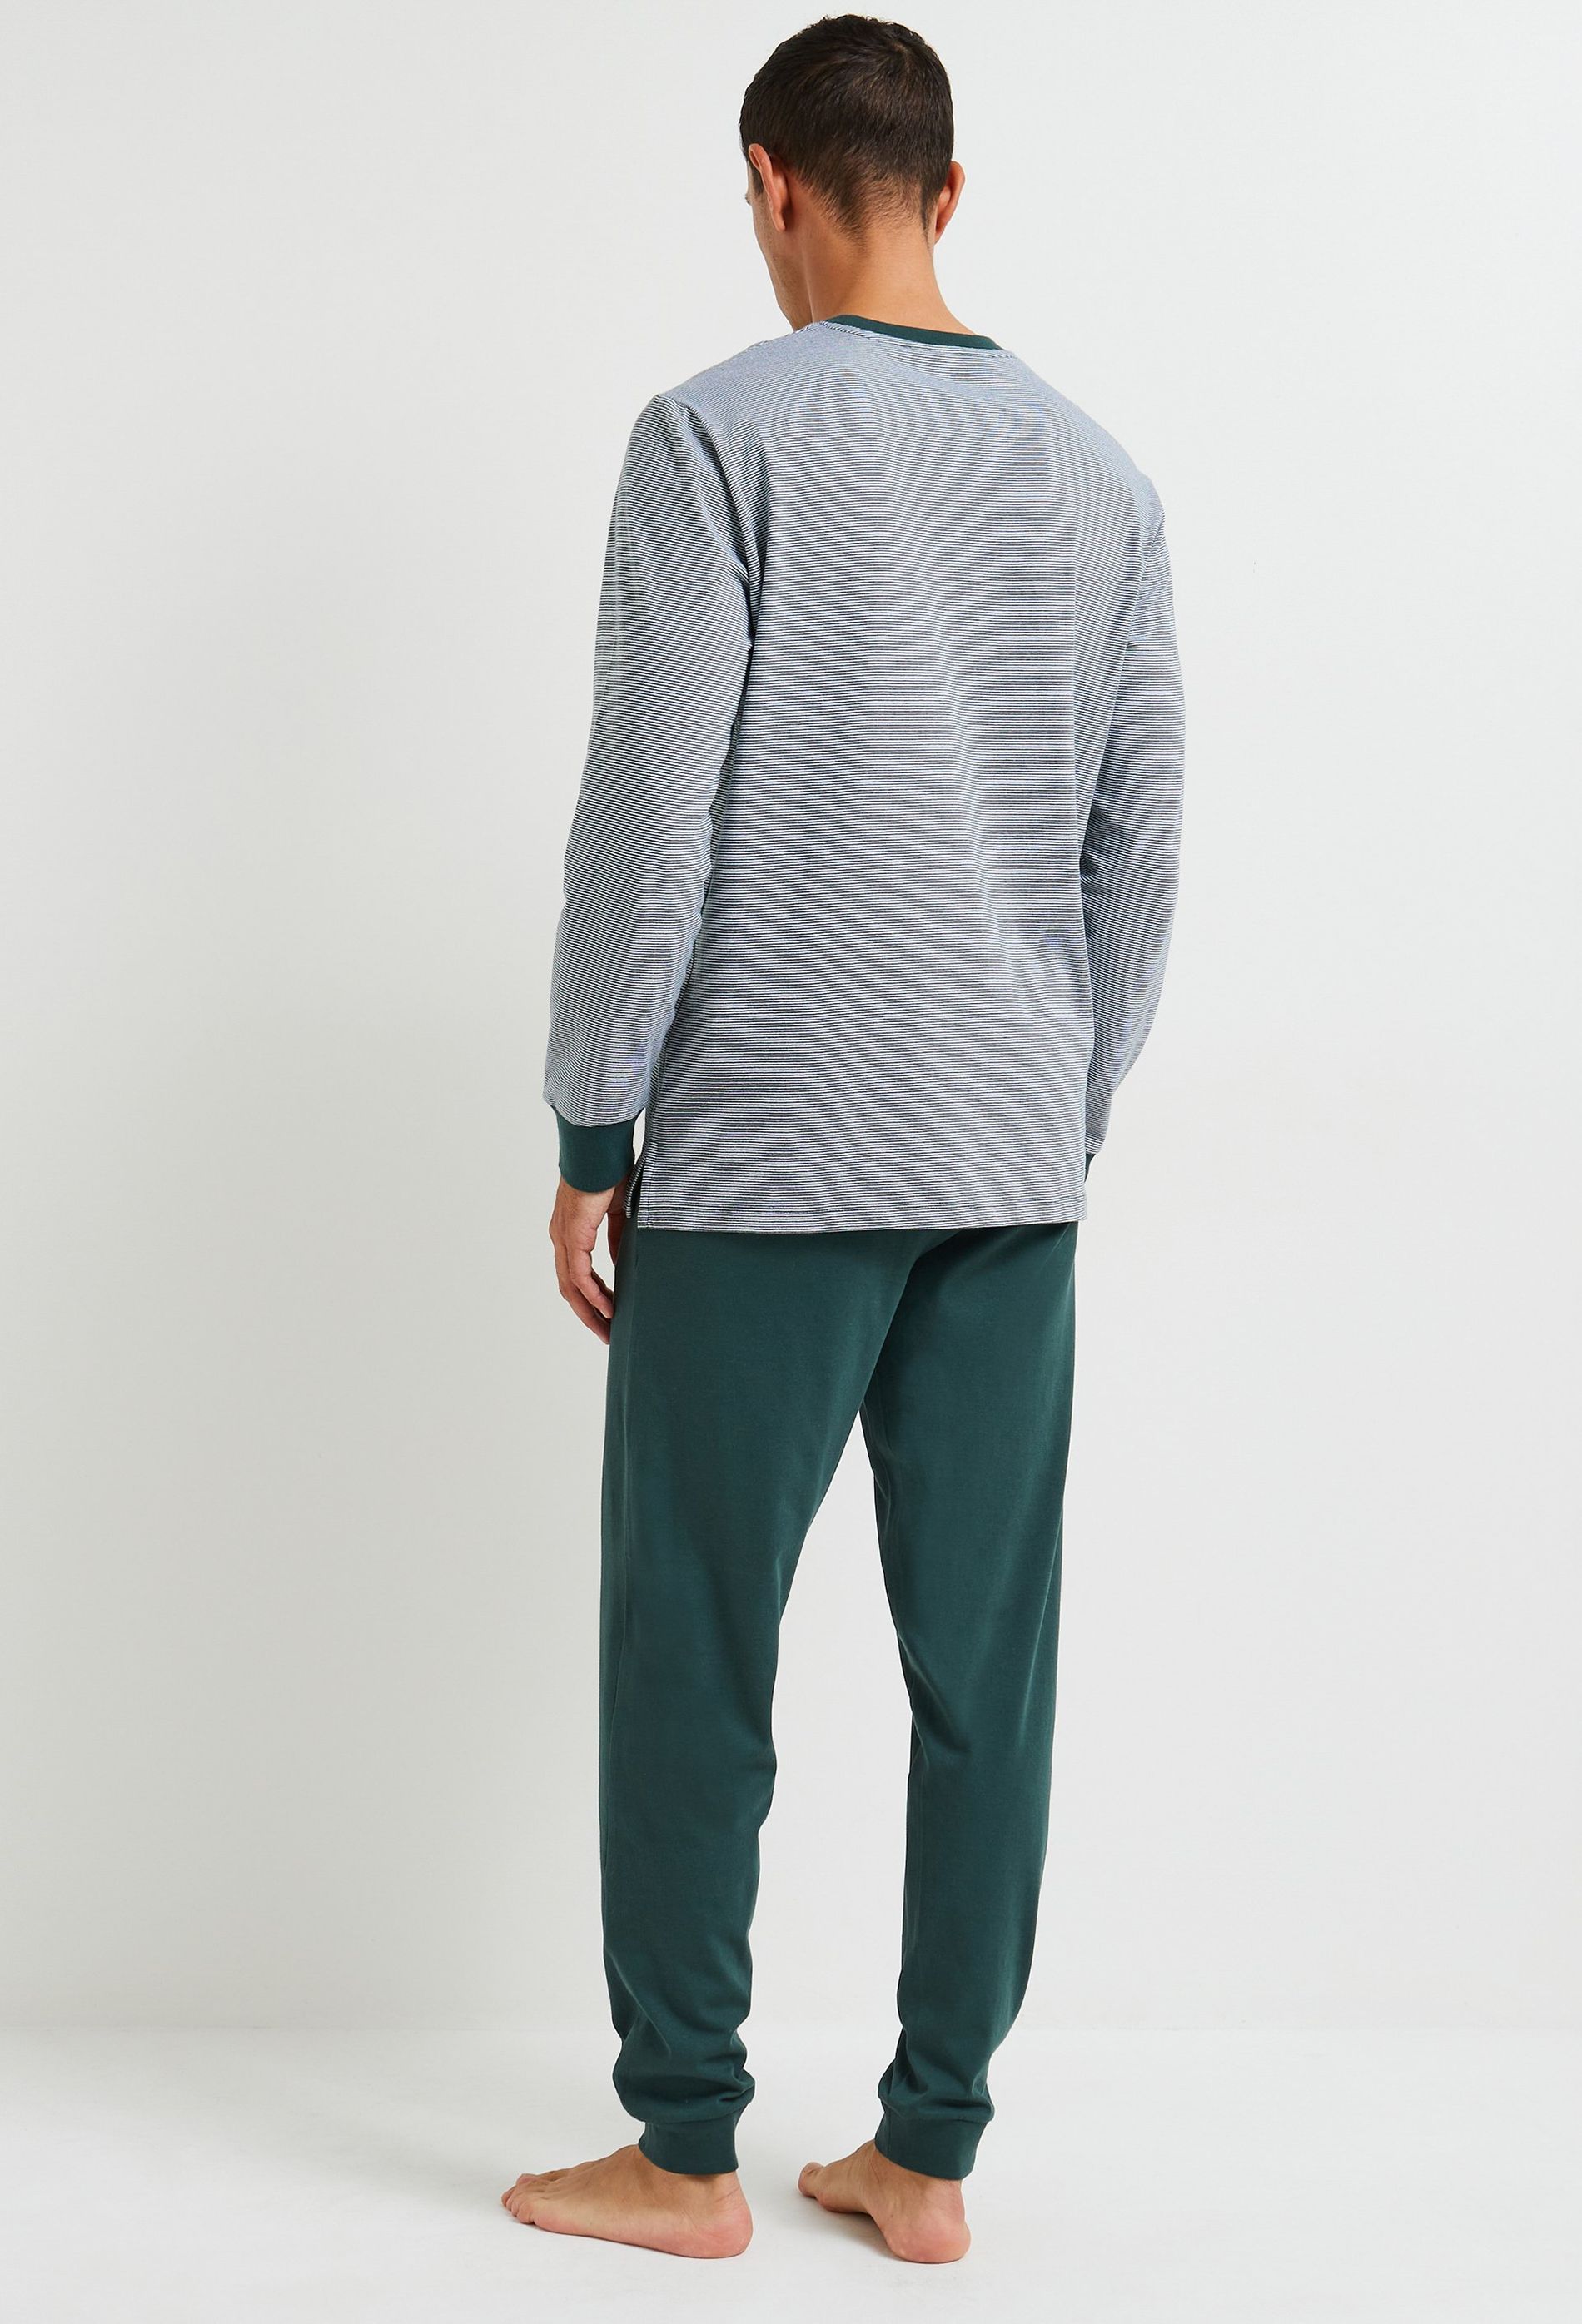 Pantalon Loungewear Jersey Coton BIO Homme Éthique Apnée Swimwear